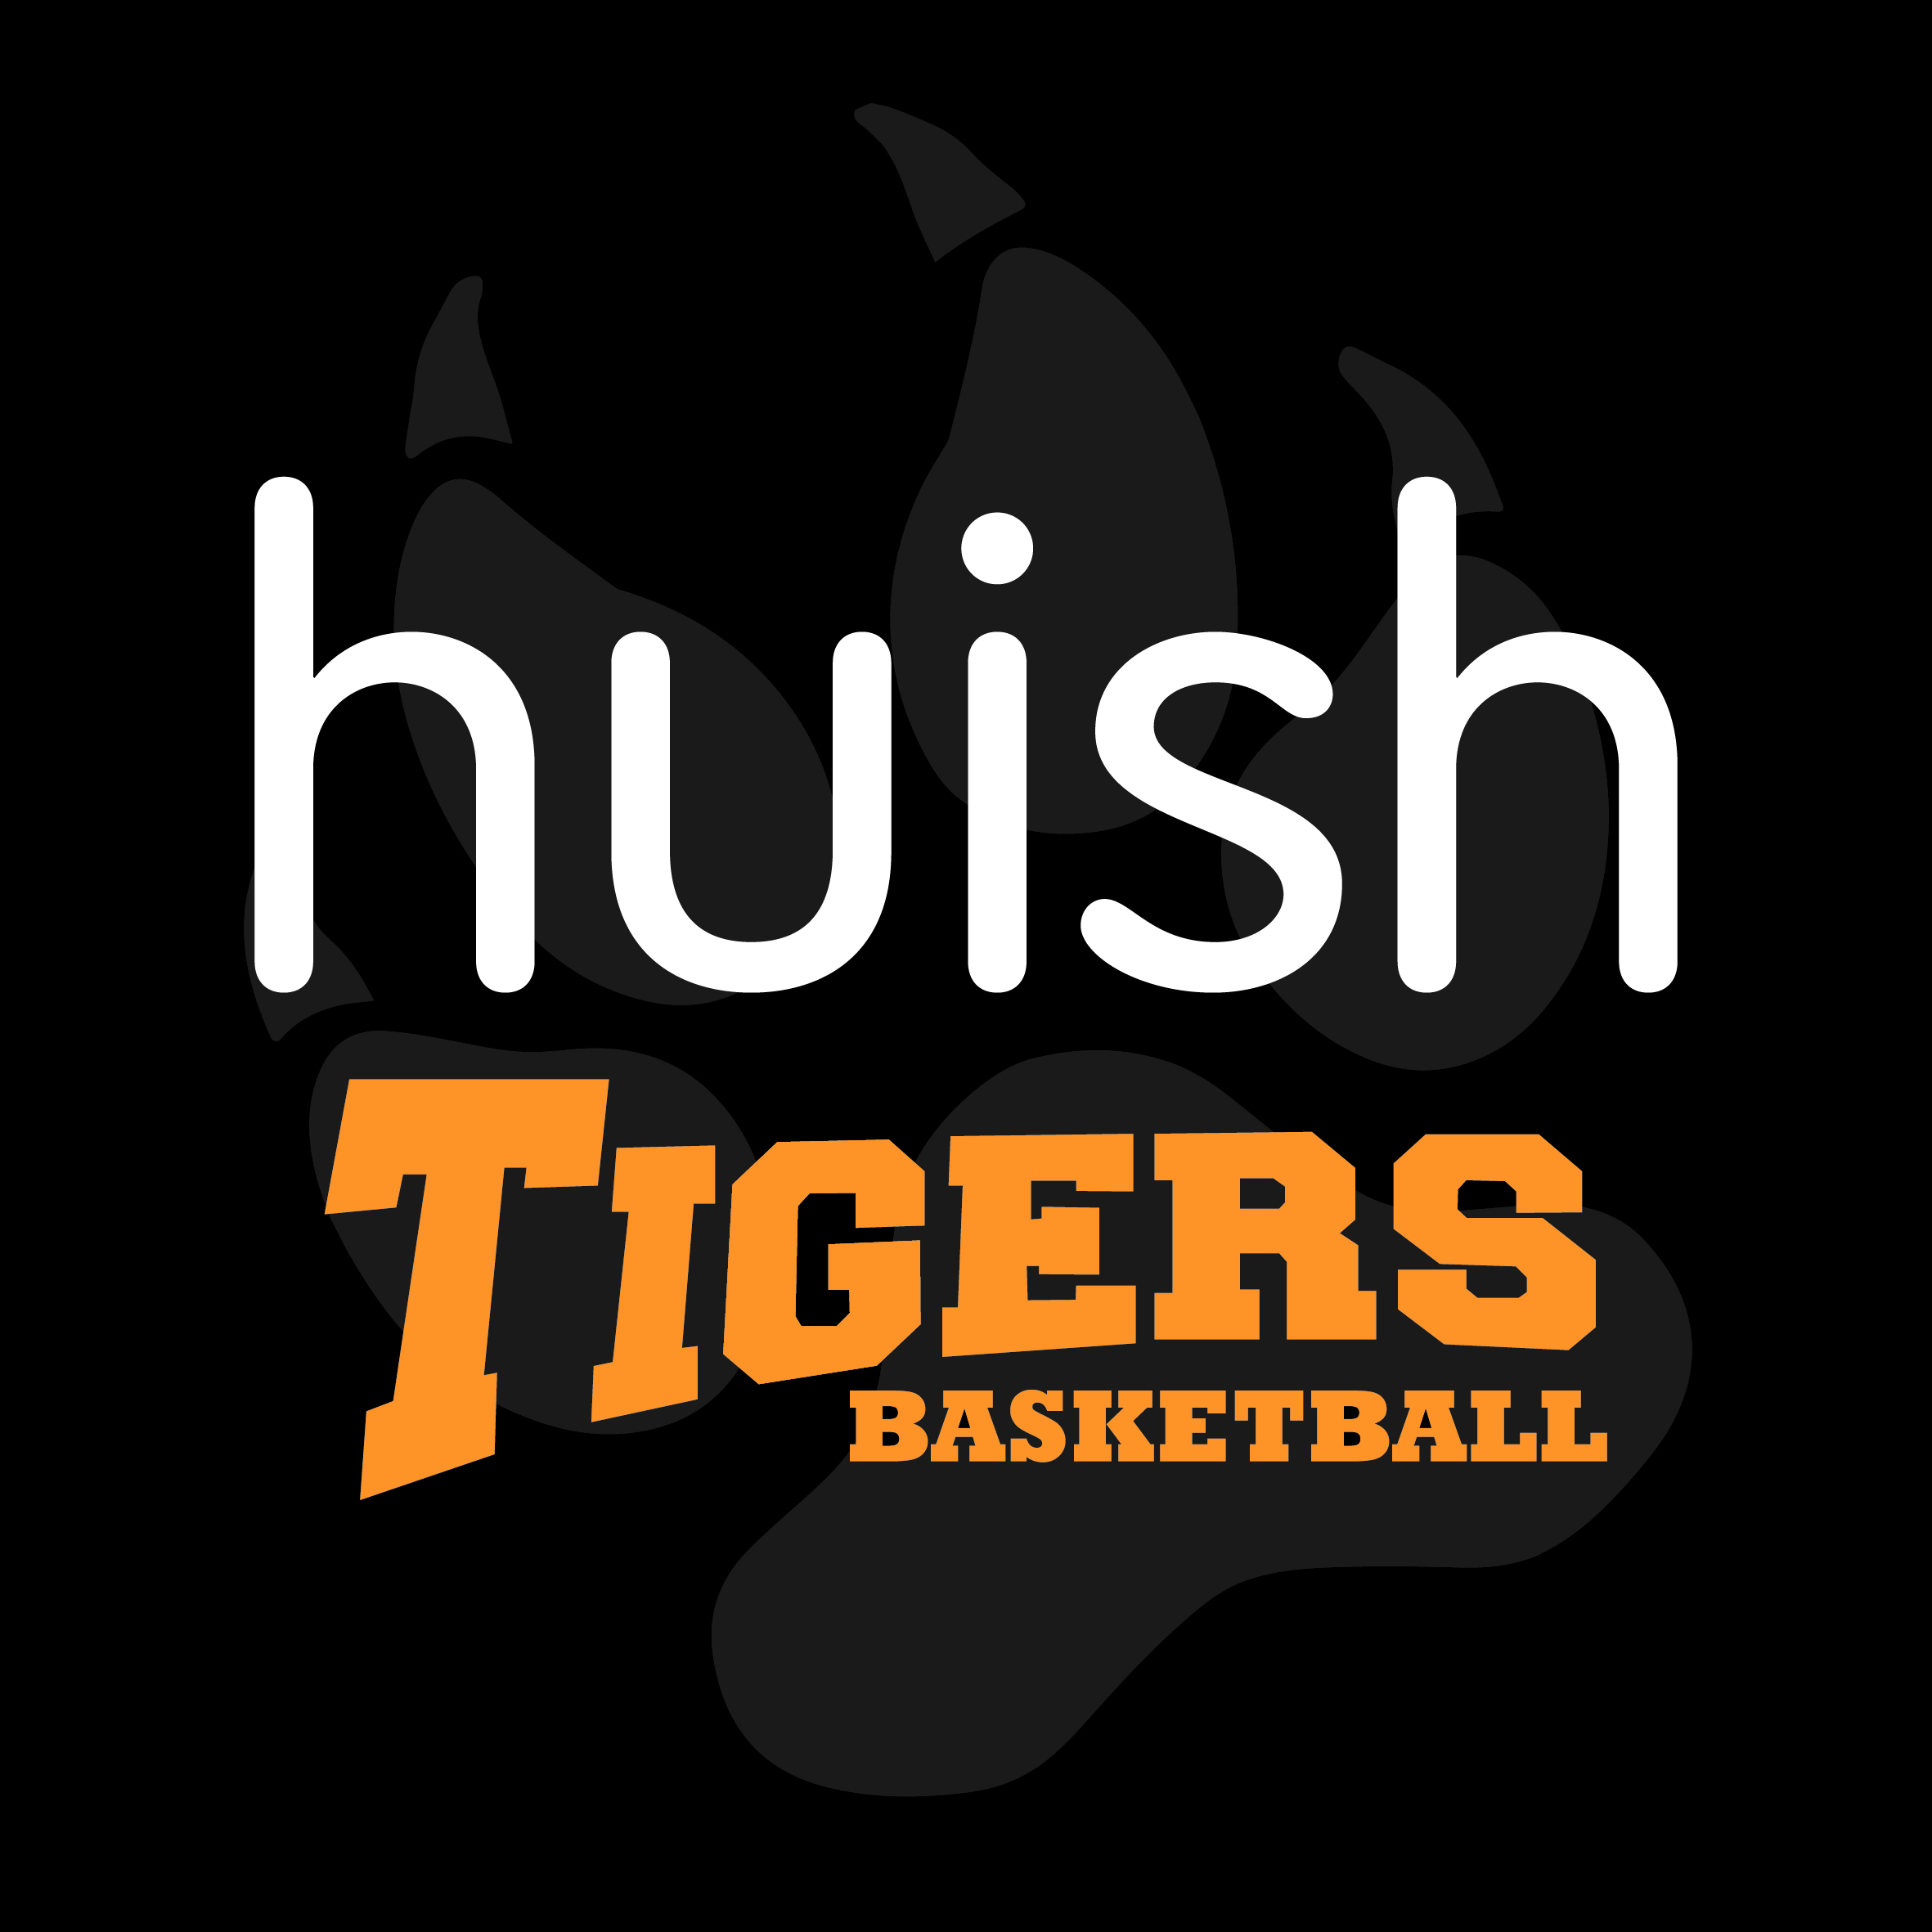 Huish Tigers Cubs Basketball aged 6-9